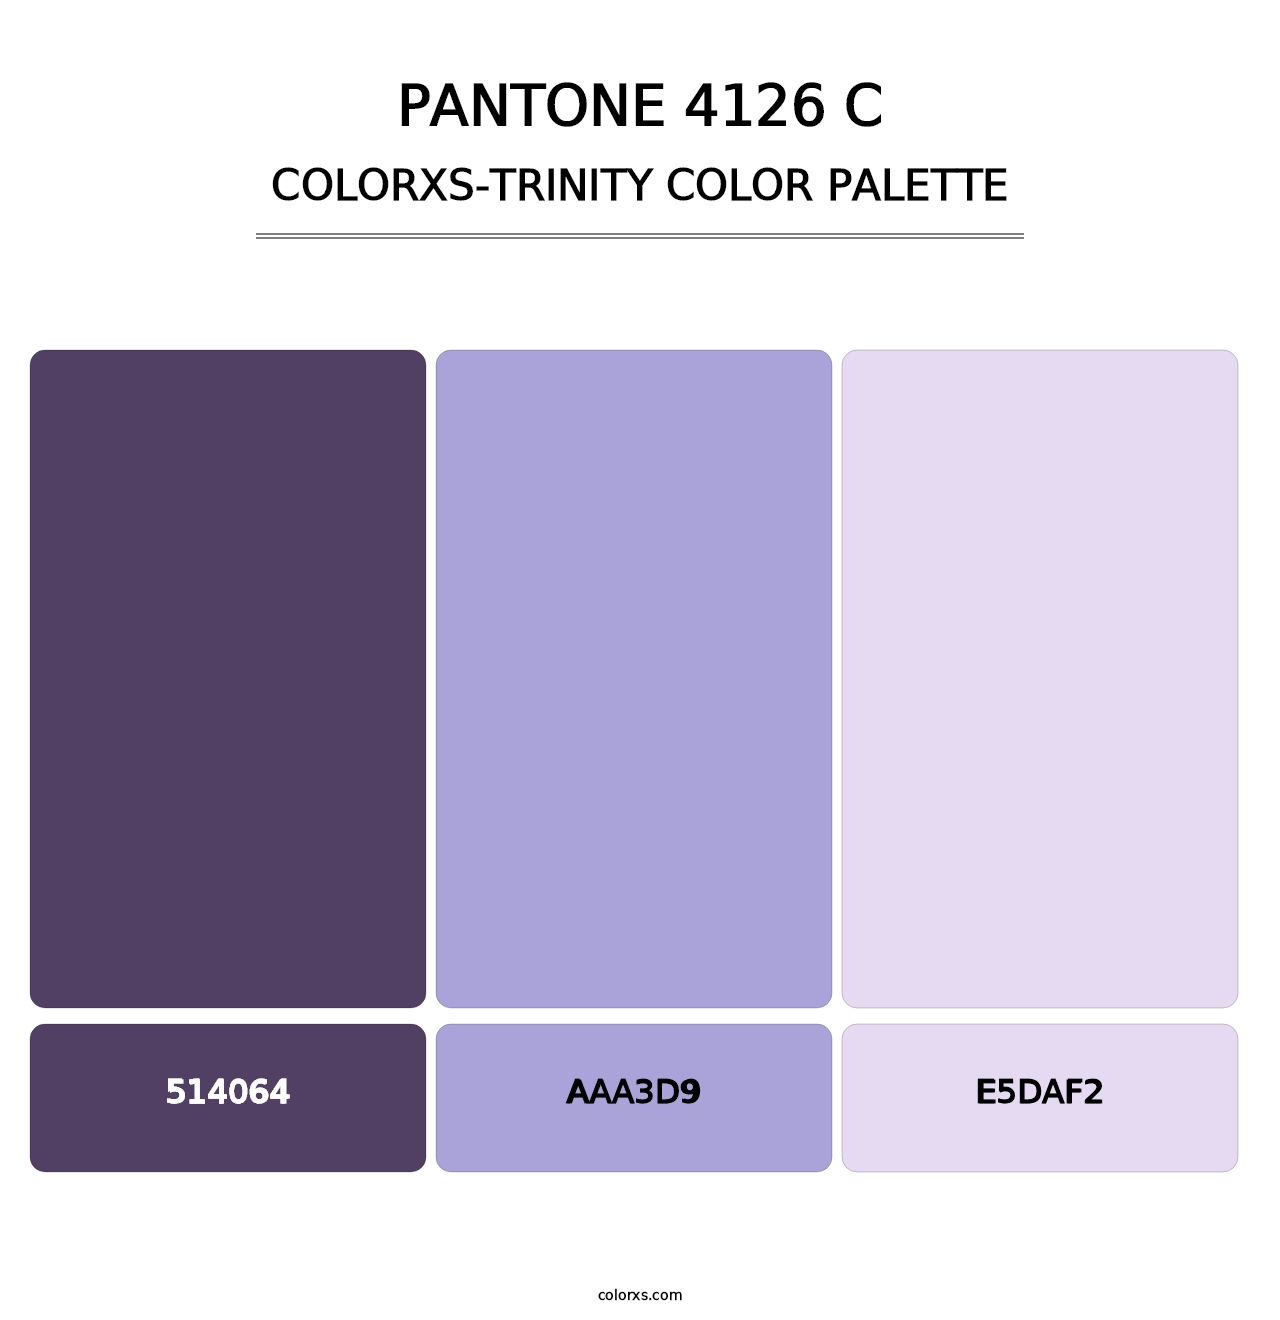 PANTONE 4126 C - Colorxs Trinity Palette